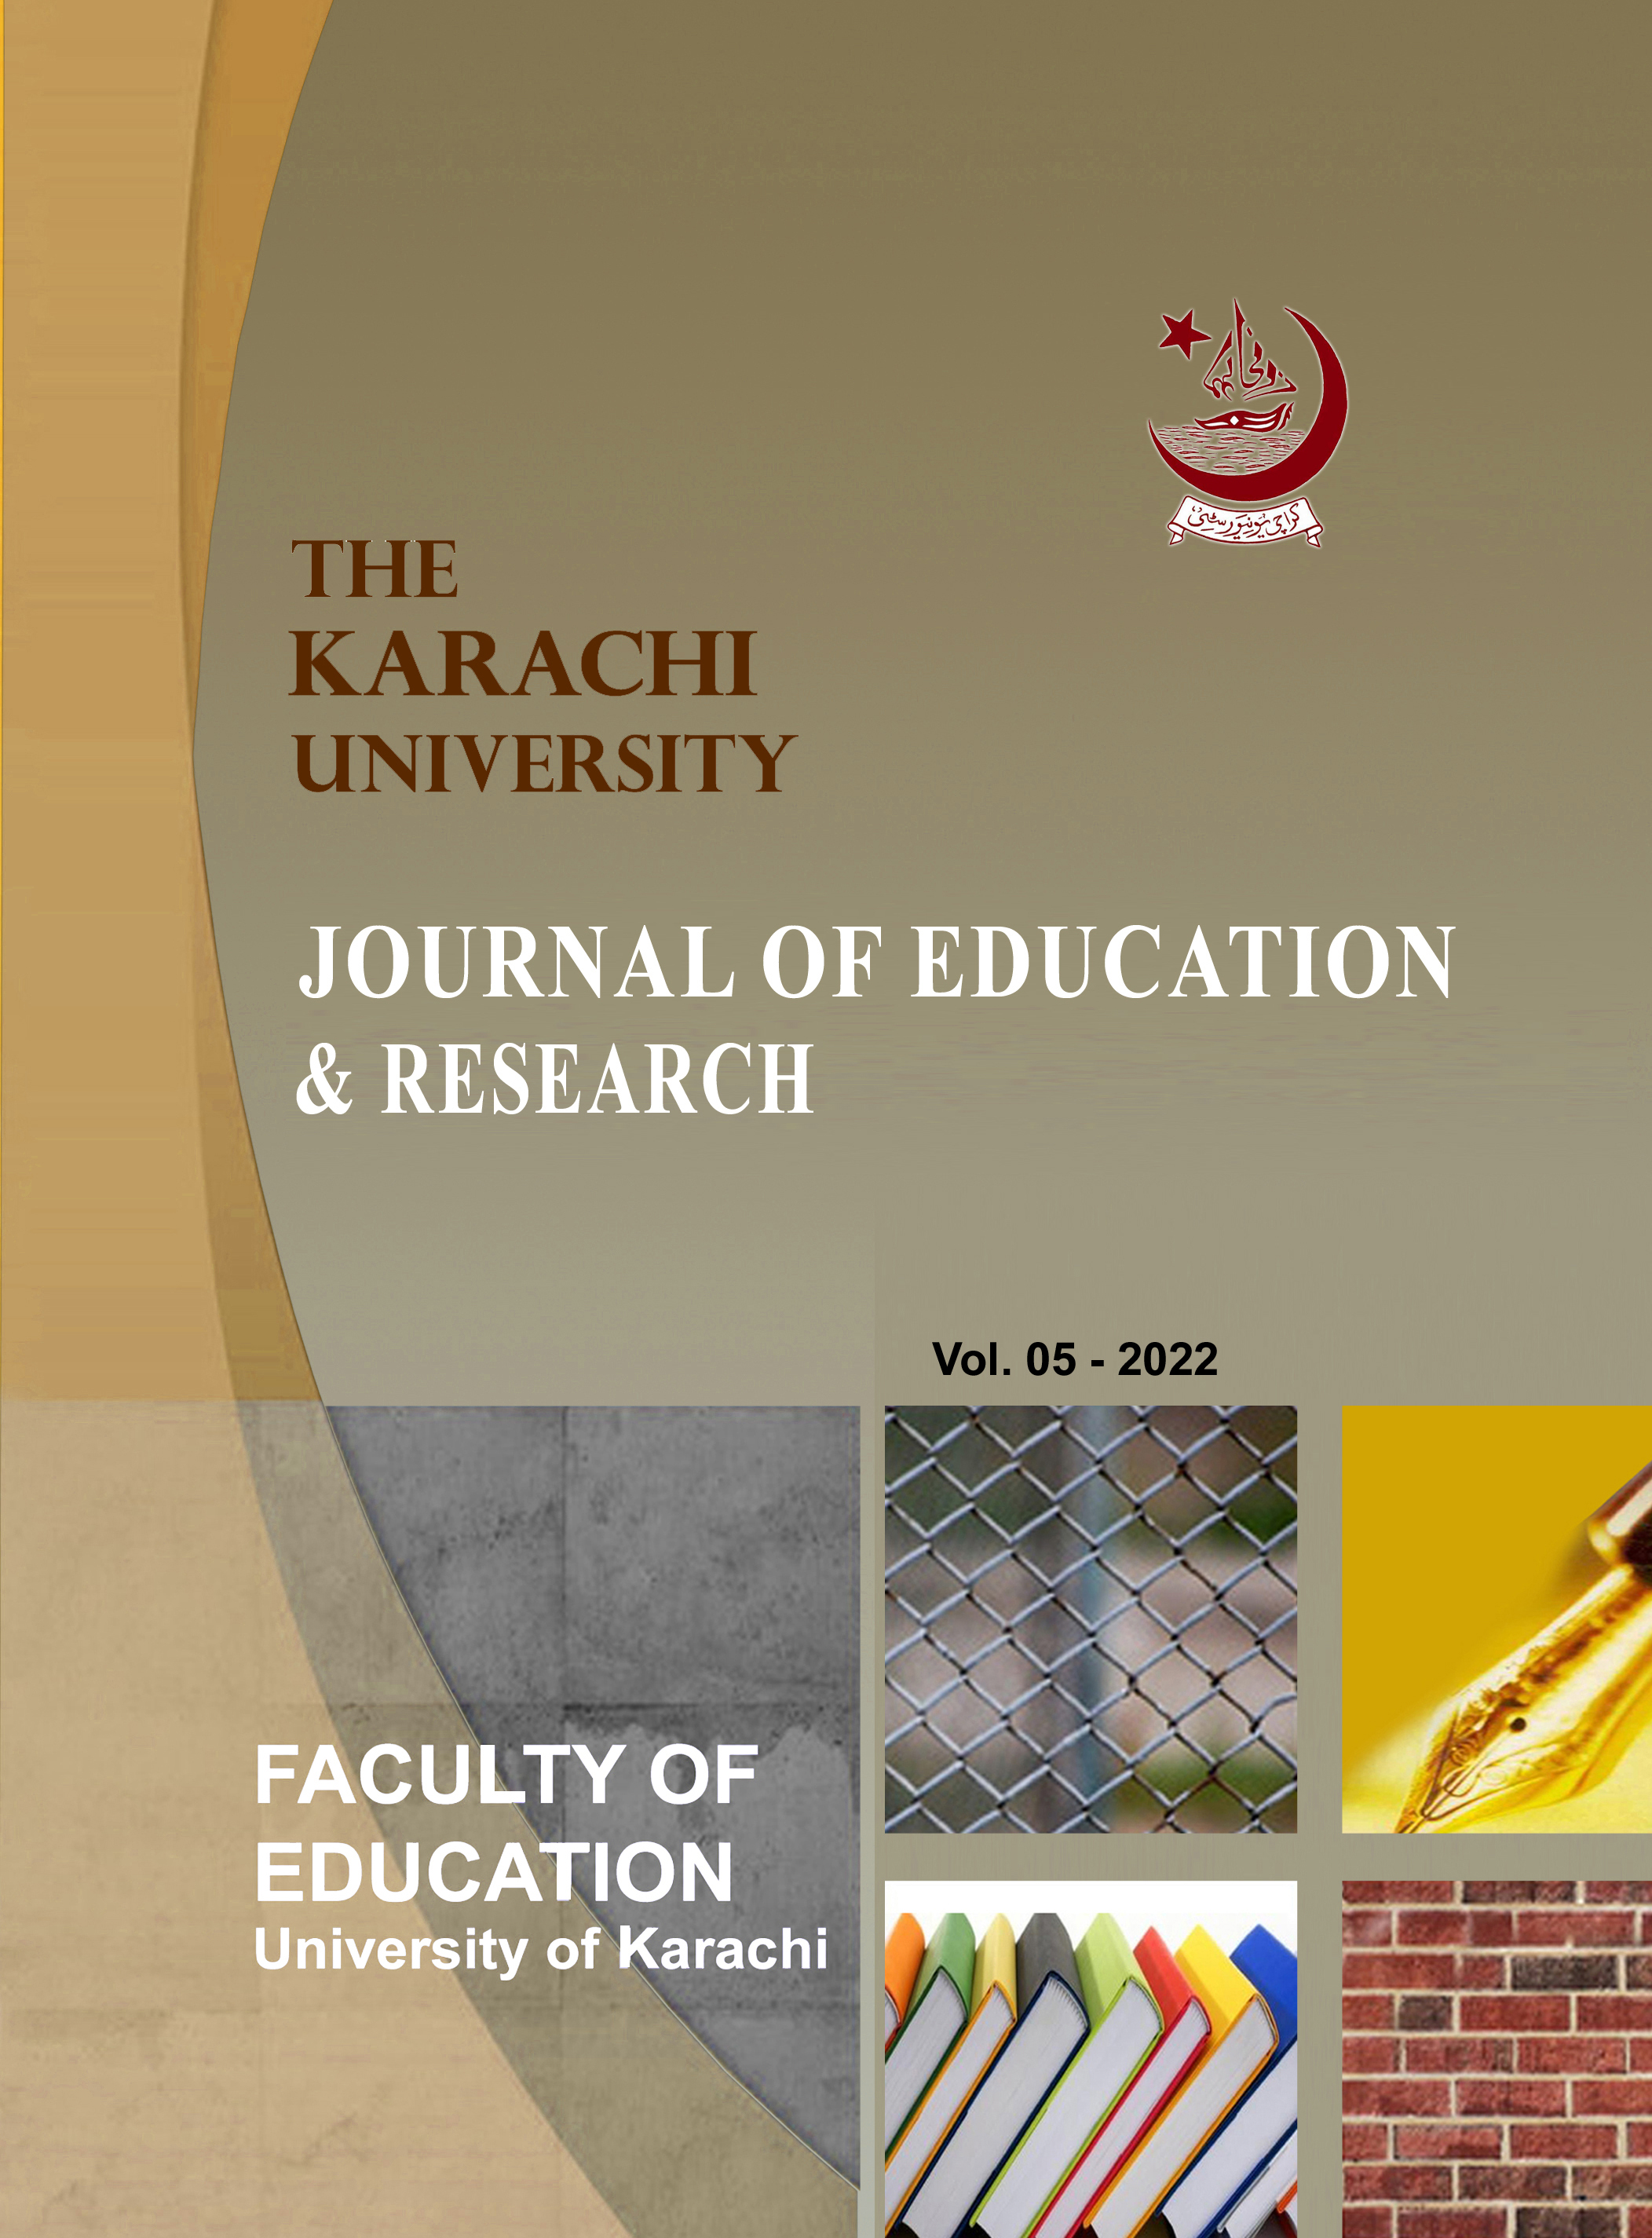 					View Vol. 5 (2022): The Karachi University Journal of Education & Research 2022
				